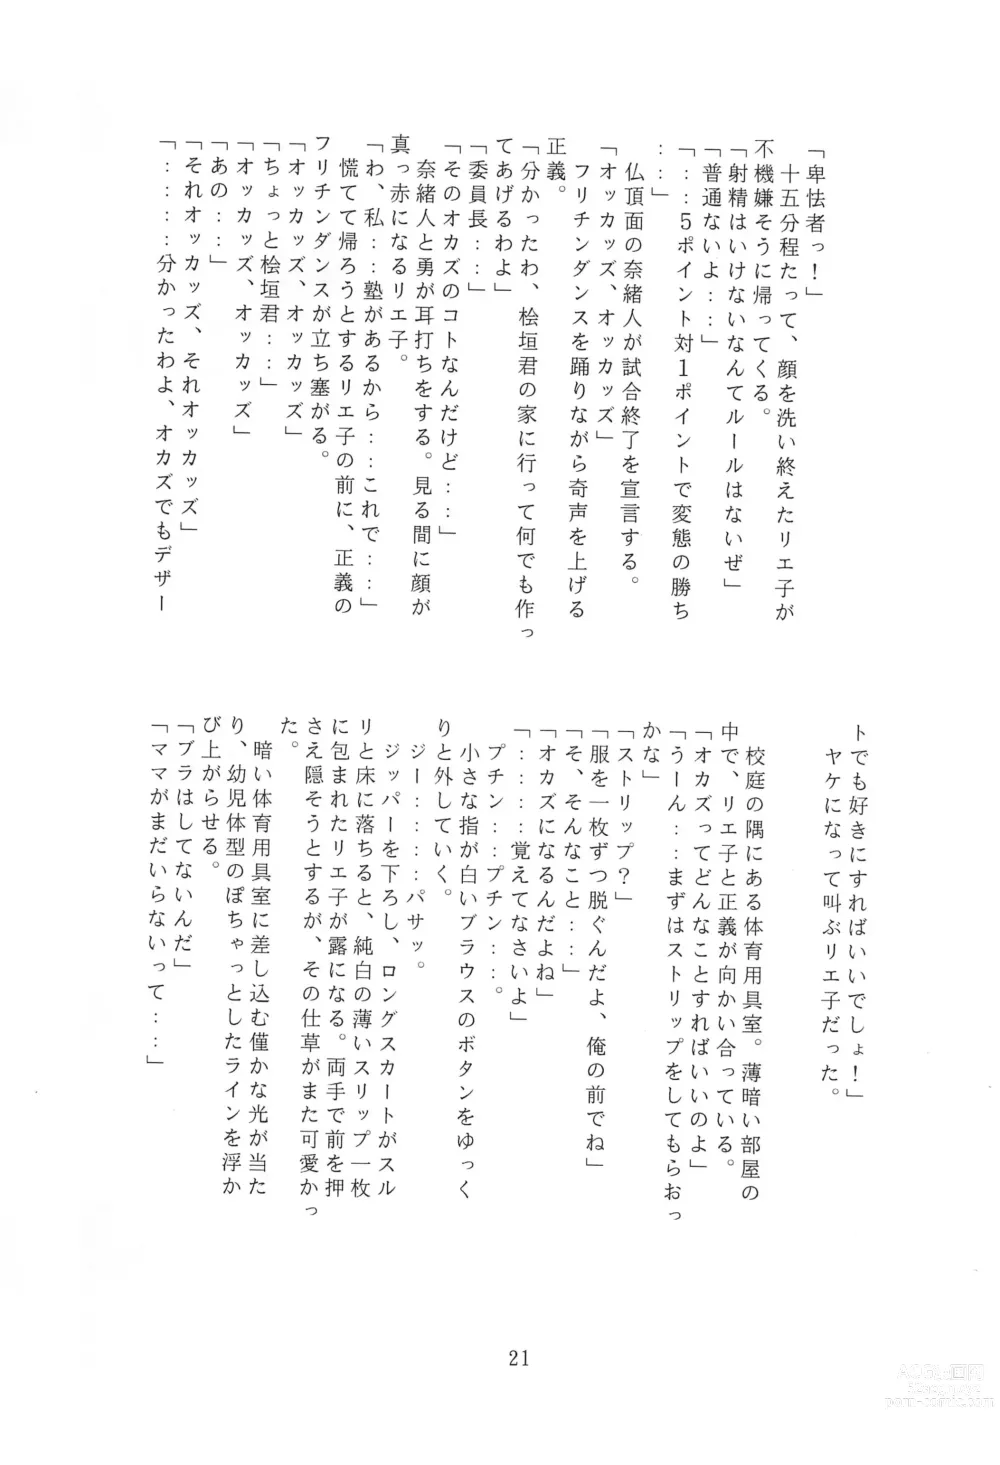 Page 21 of doujinshi JANGLE ONI Mermaid